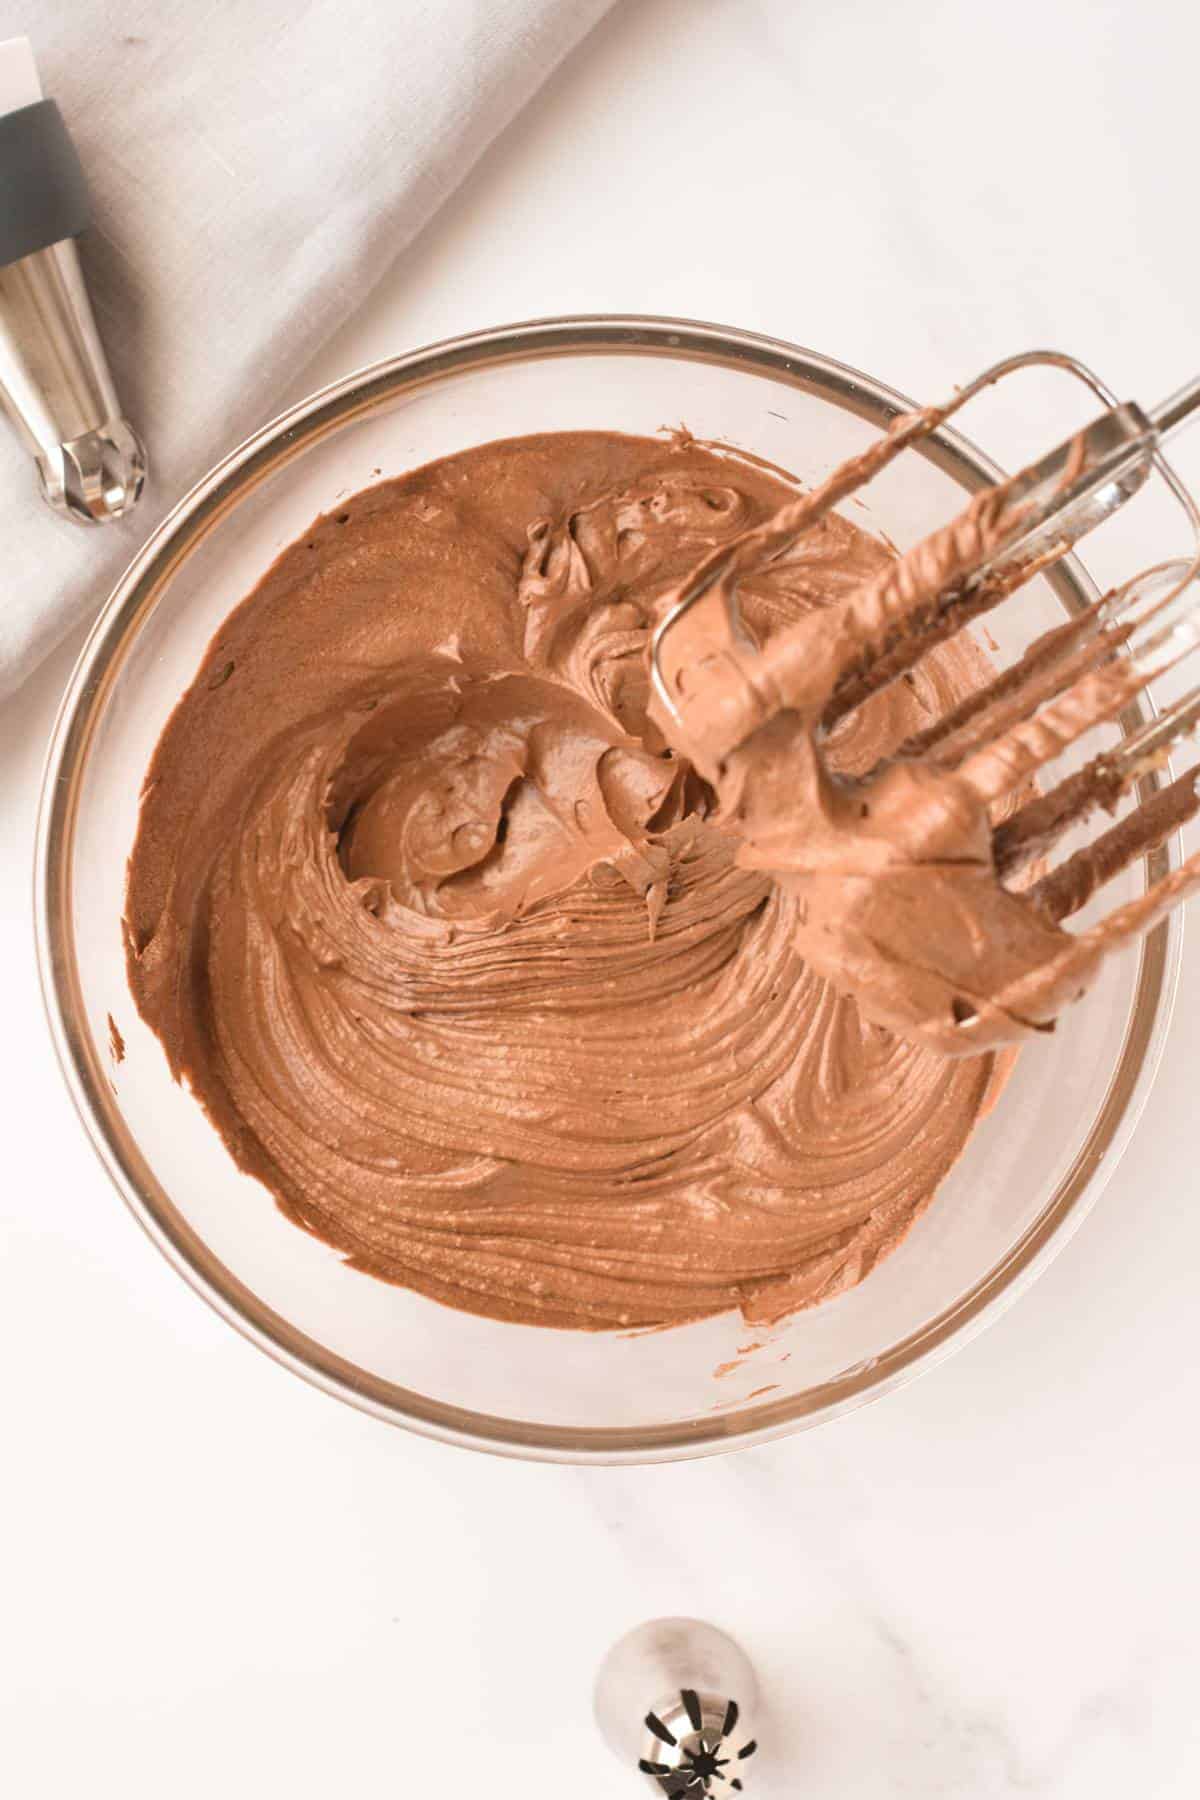 Vegan Chocolate Frosting Recipe